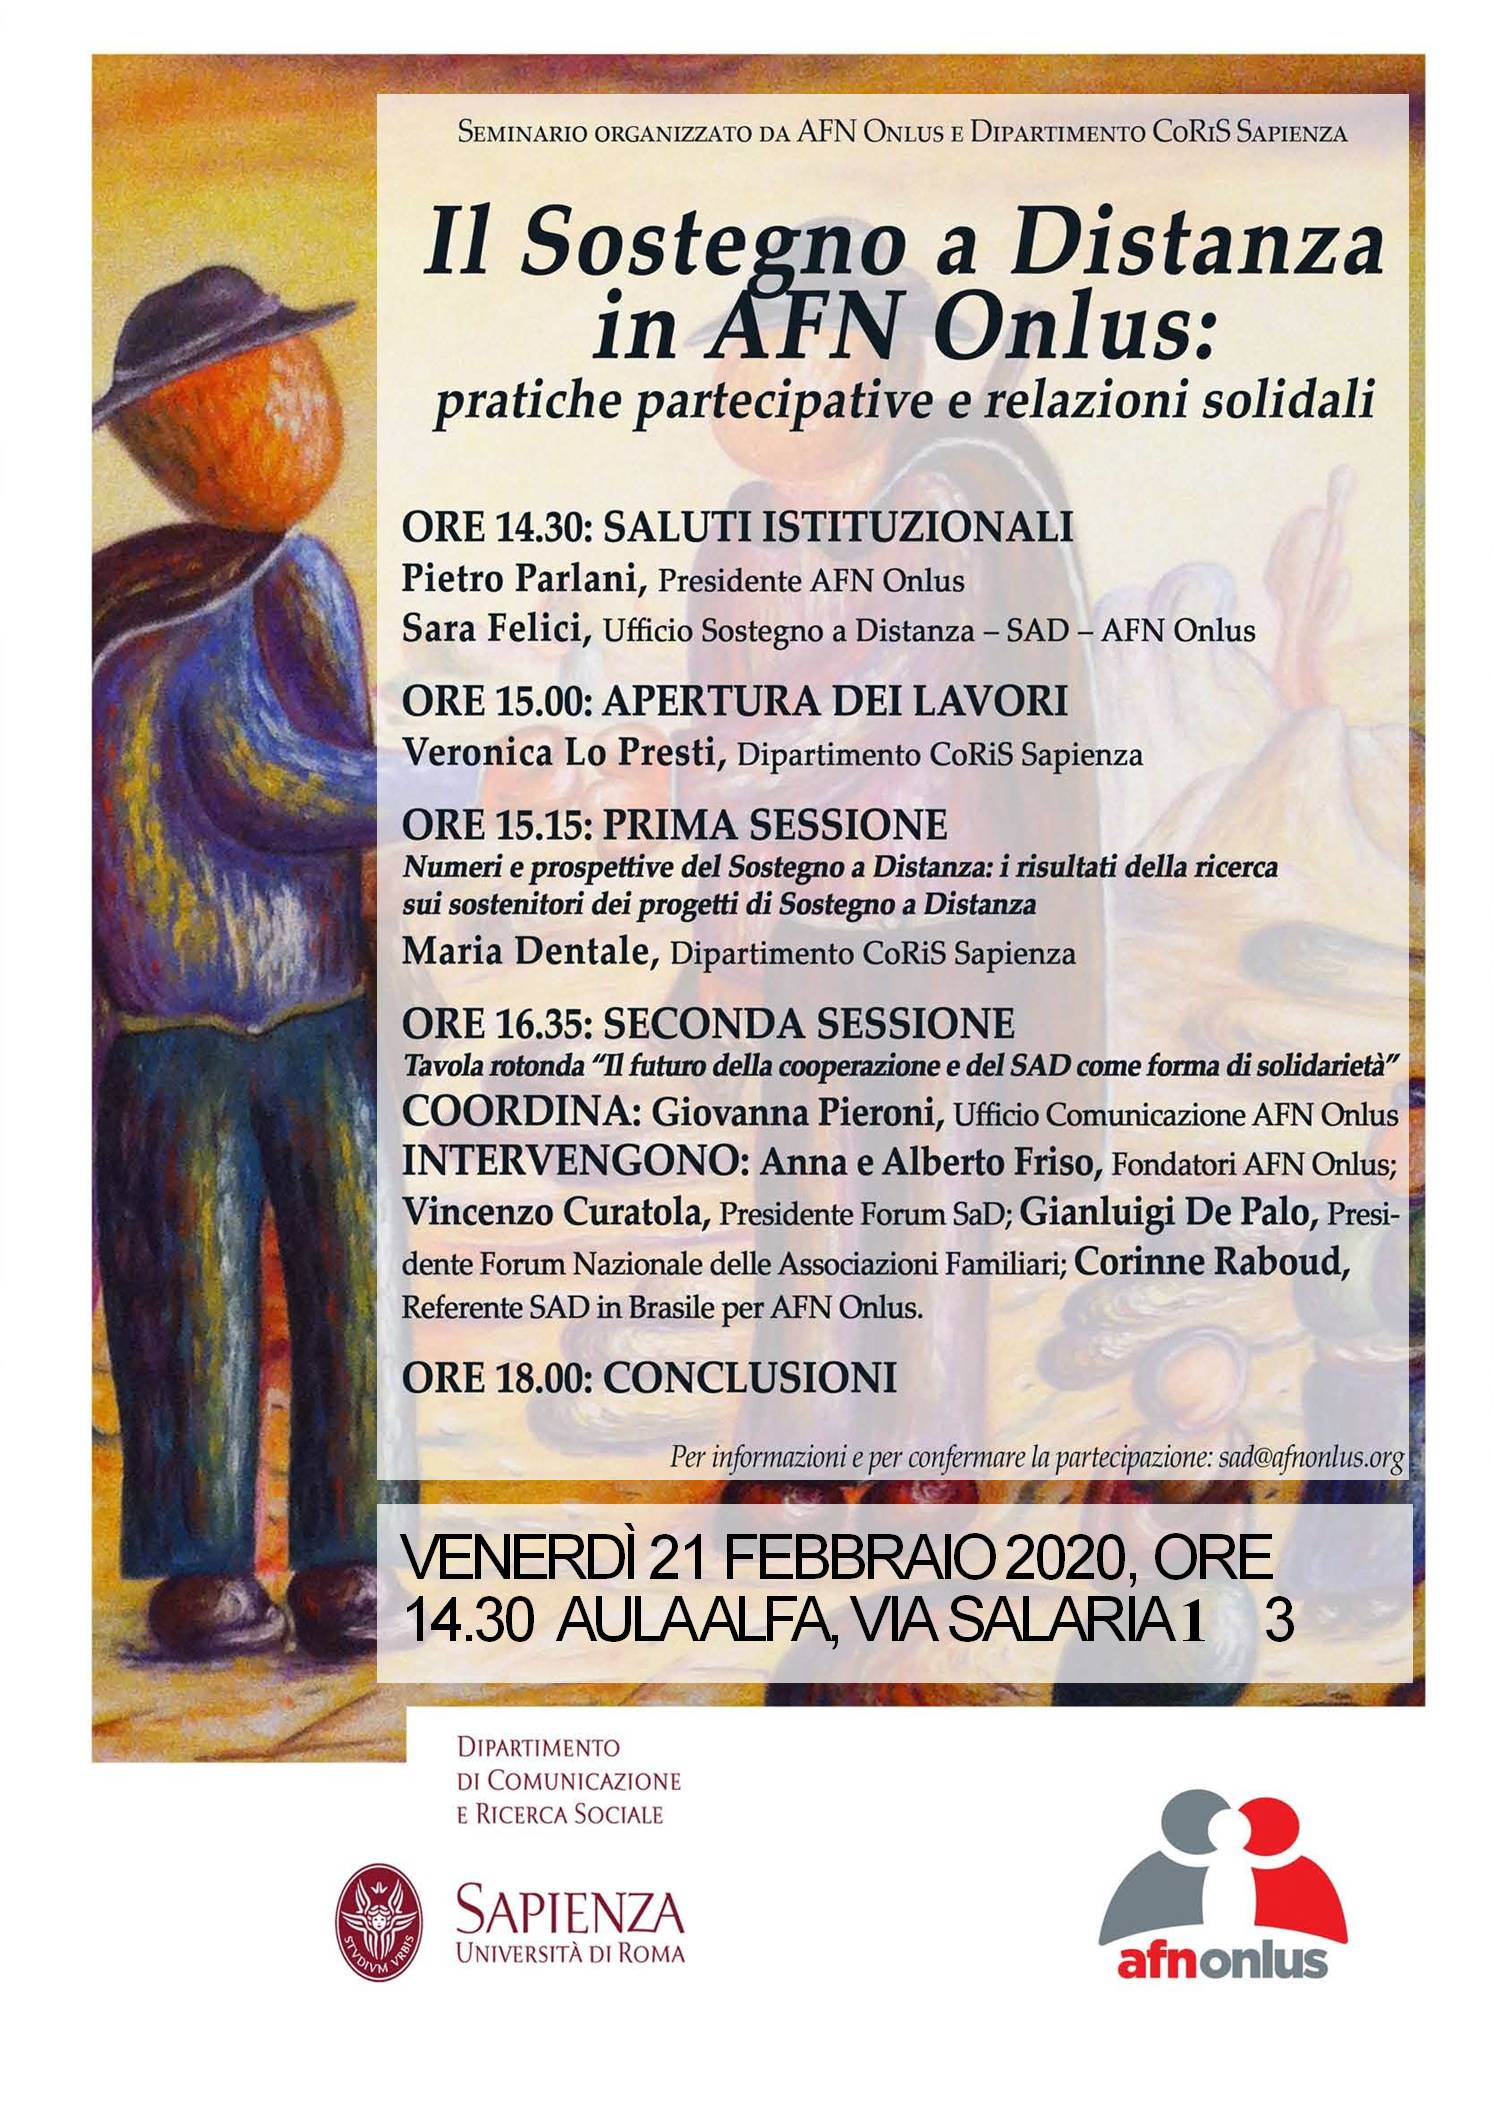 Roma: Presentazione dati ricerca AFN onlus